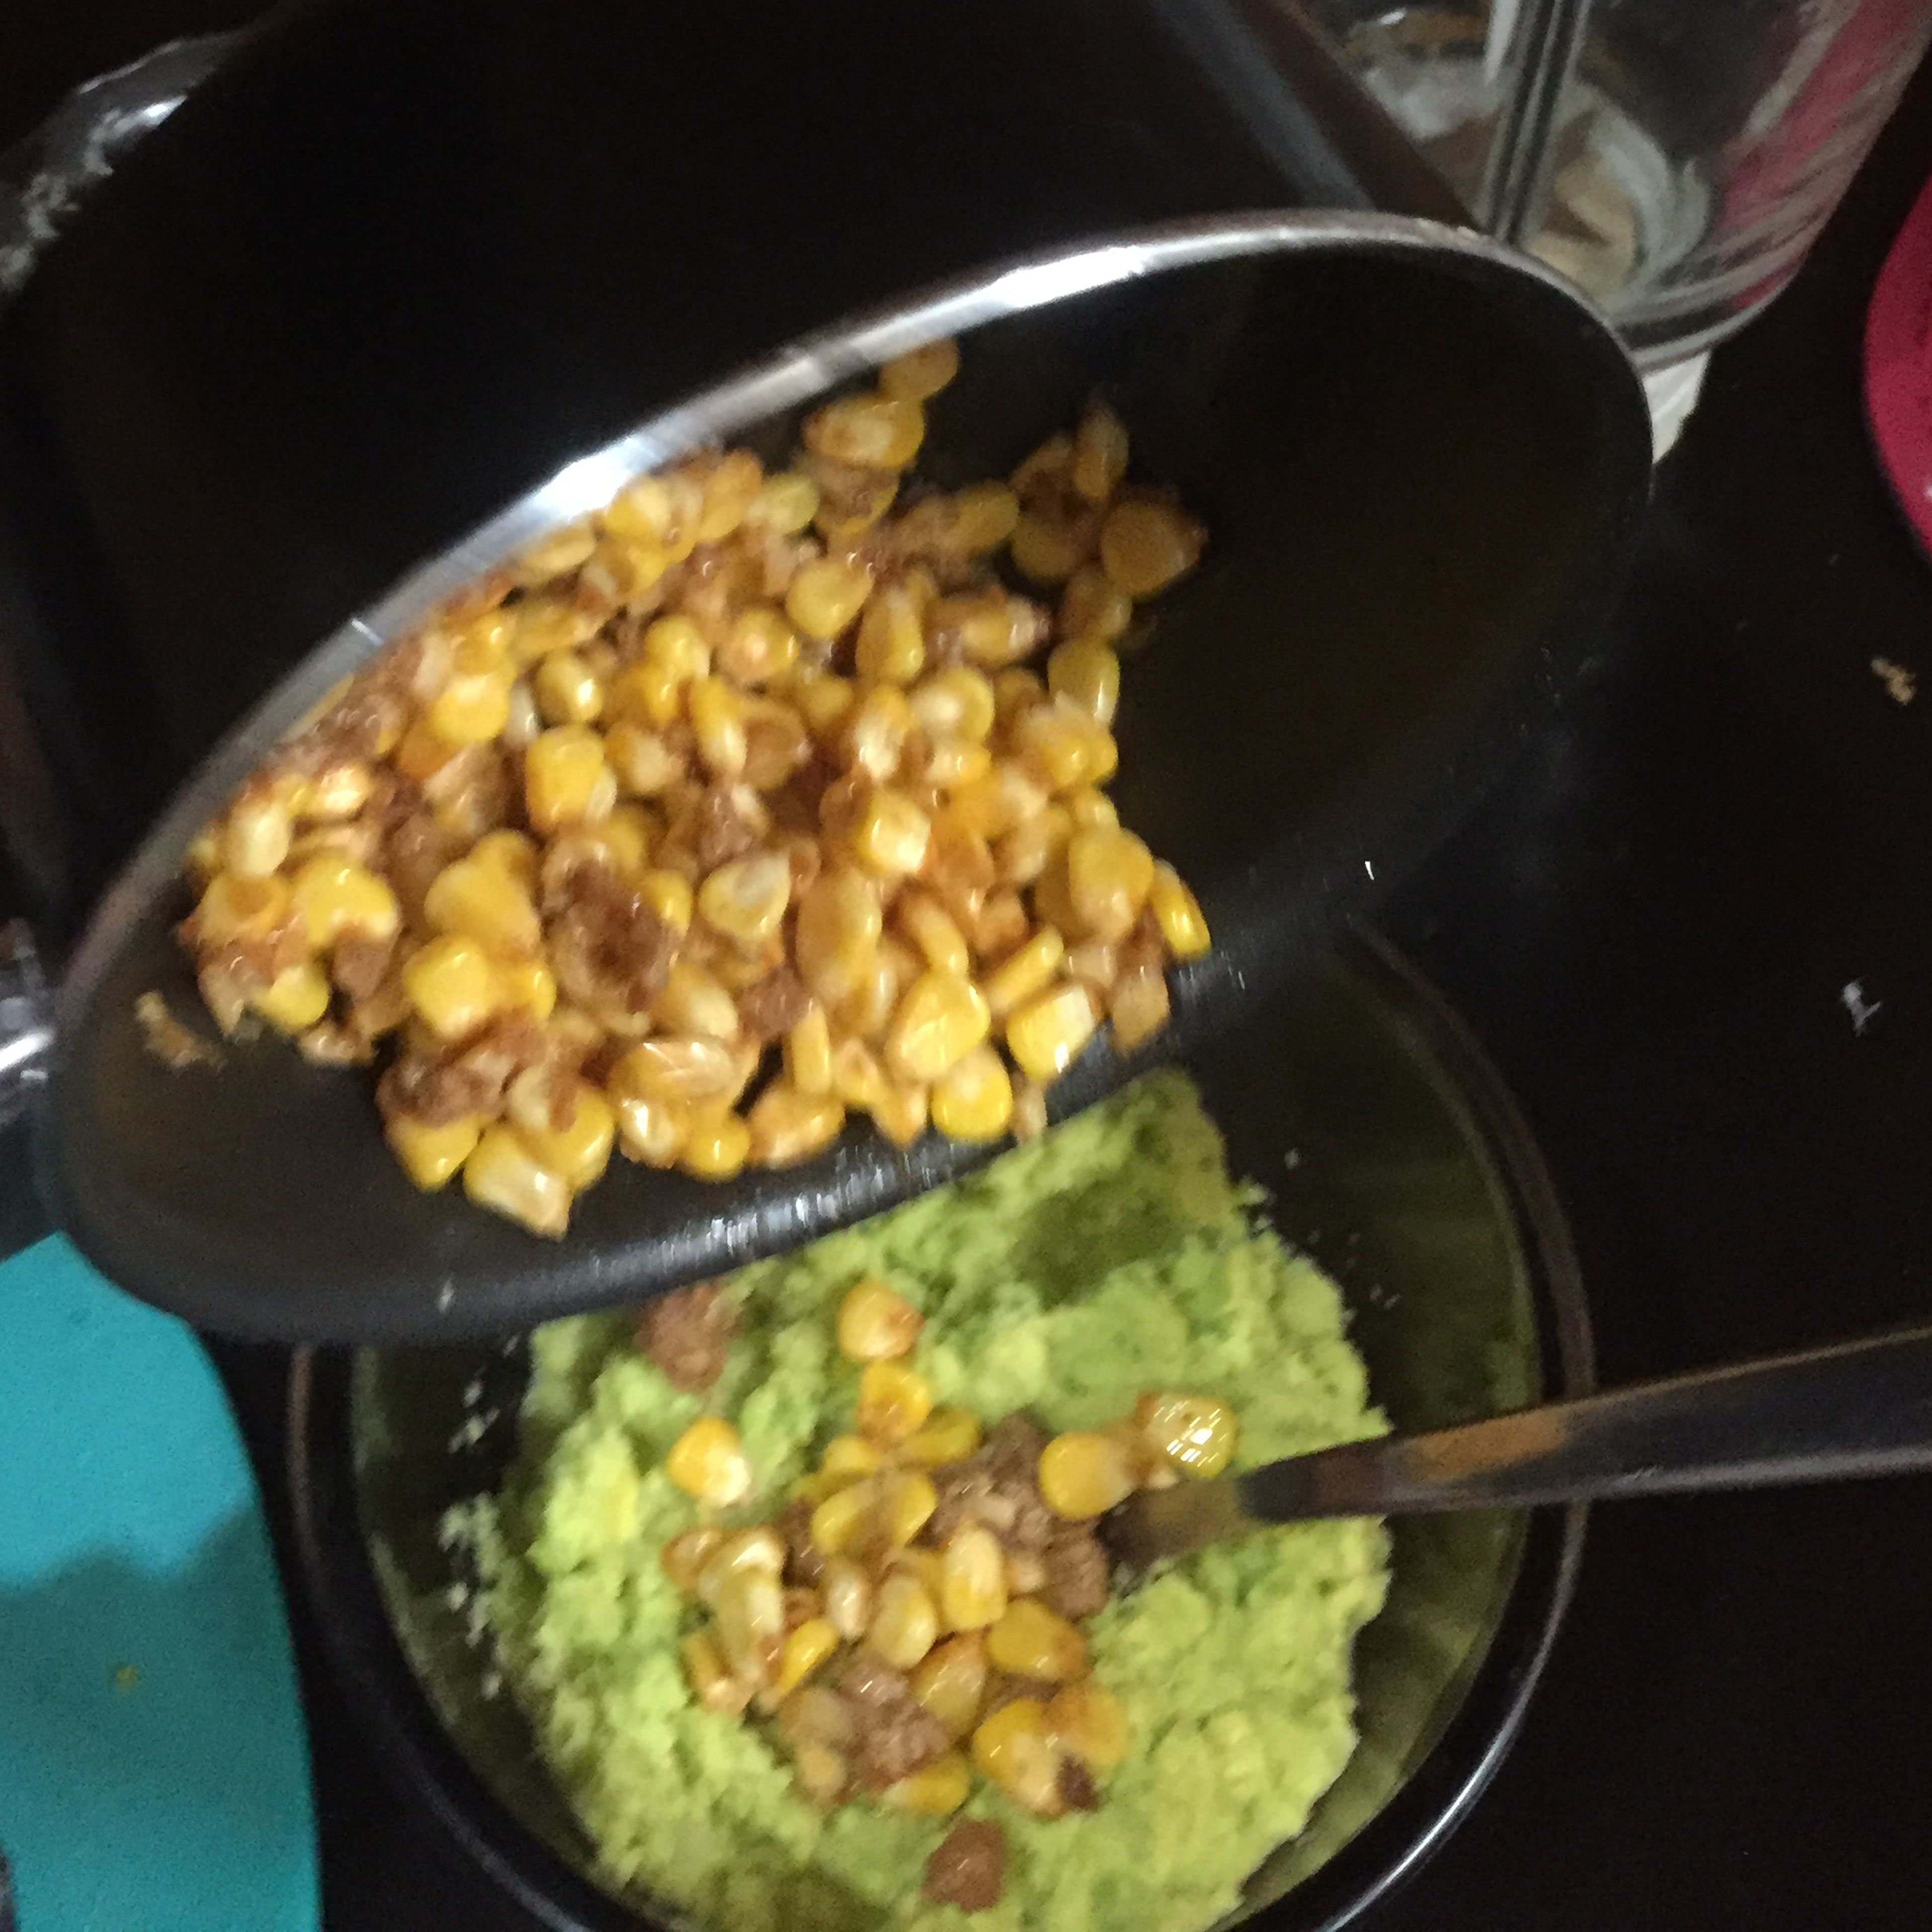 Put together with sweet corn already stir, with avocado salsa